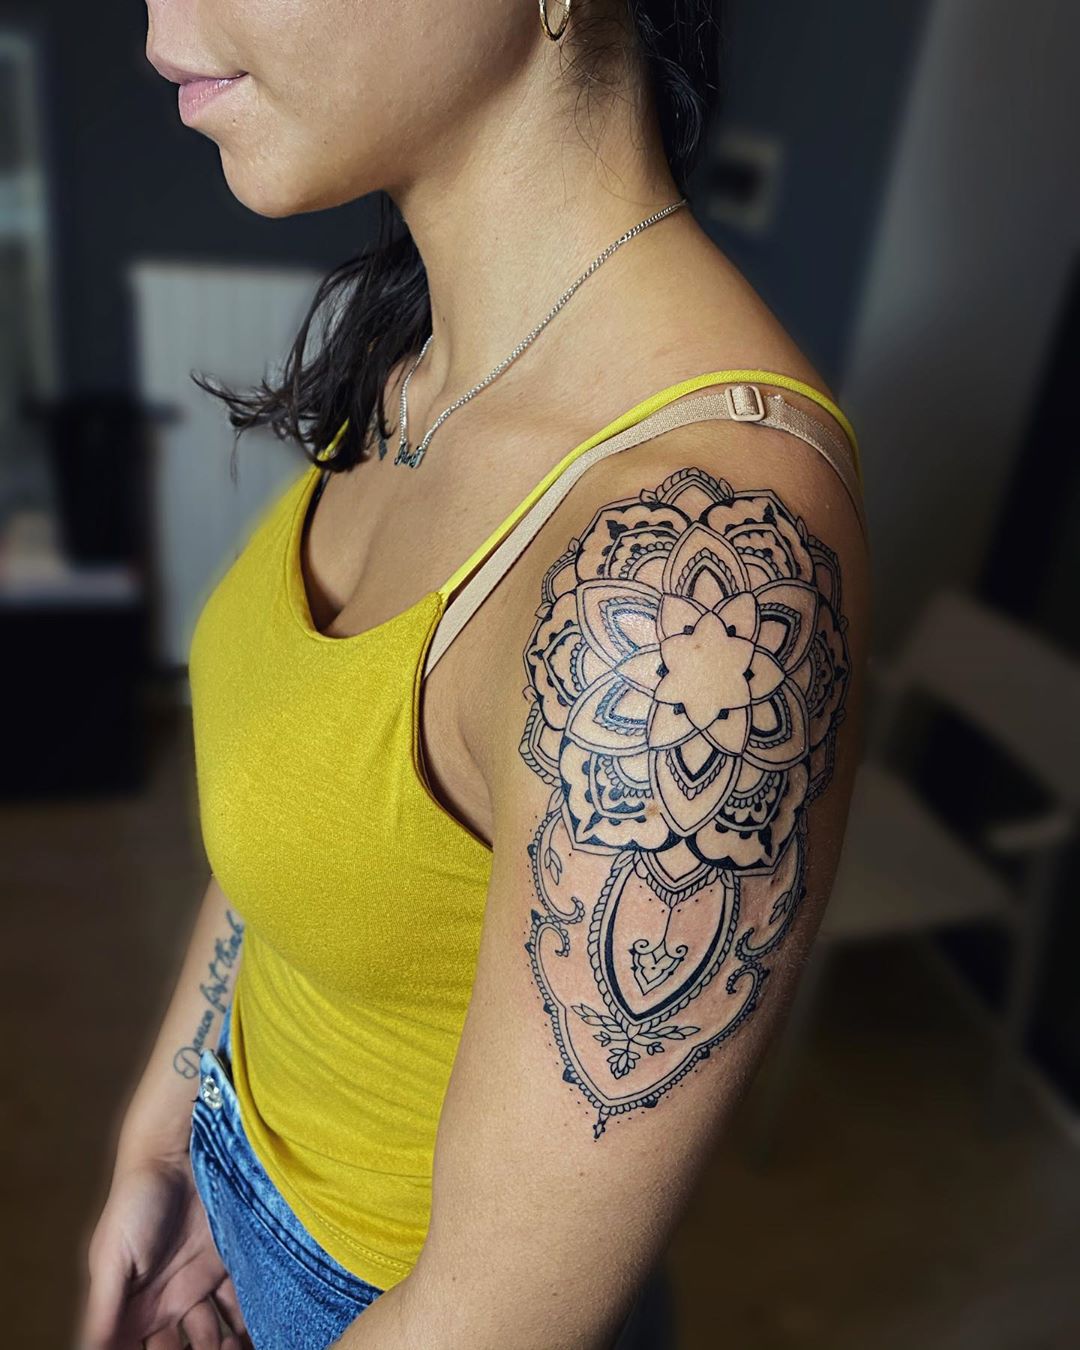 UPDATED] 65 Graceful Shoulder Tattoos for Women